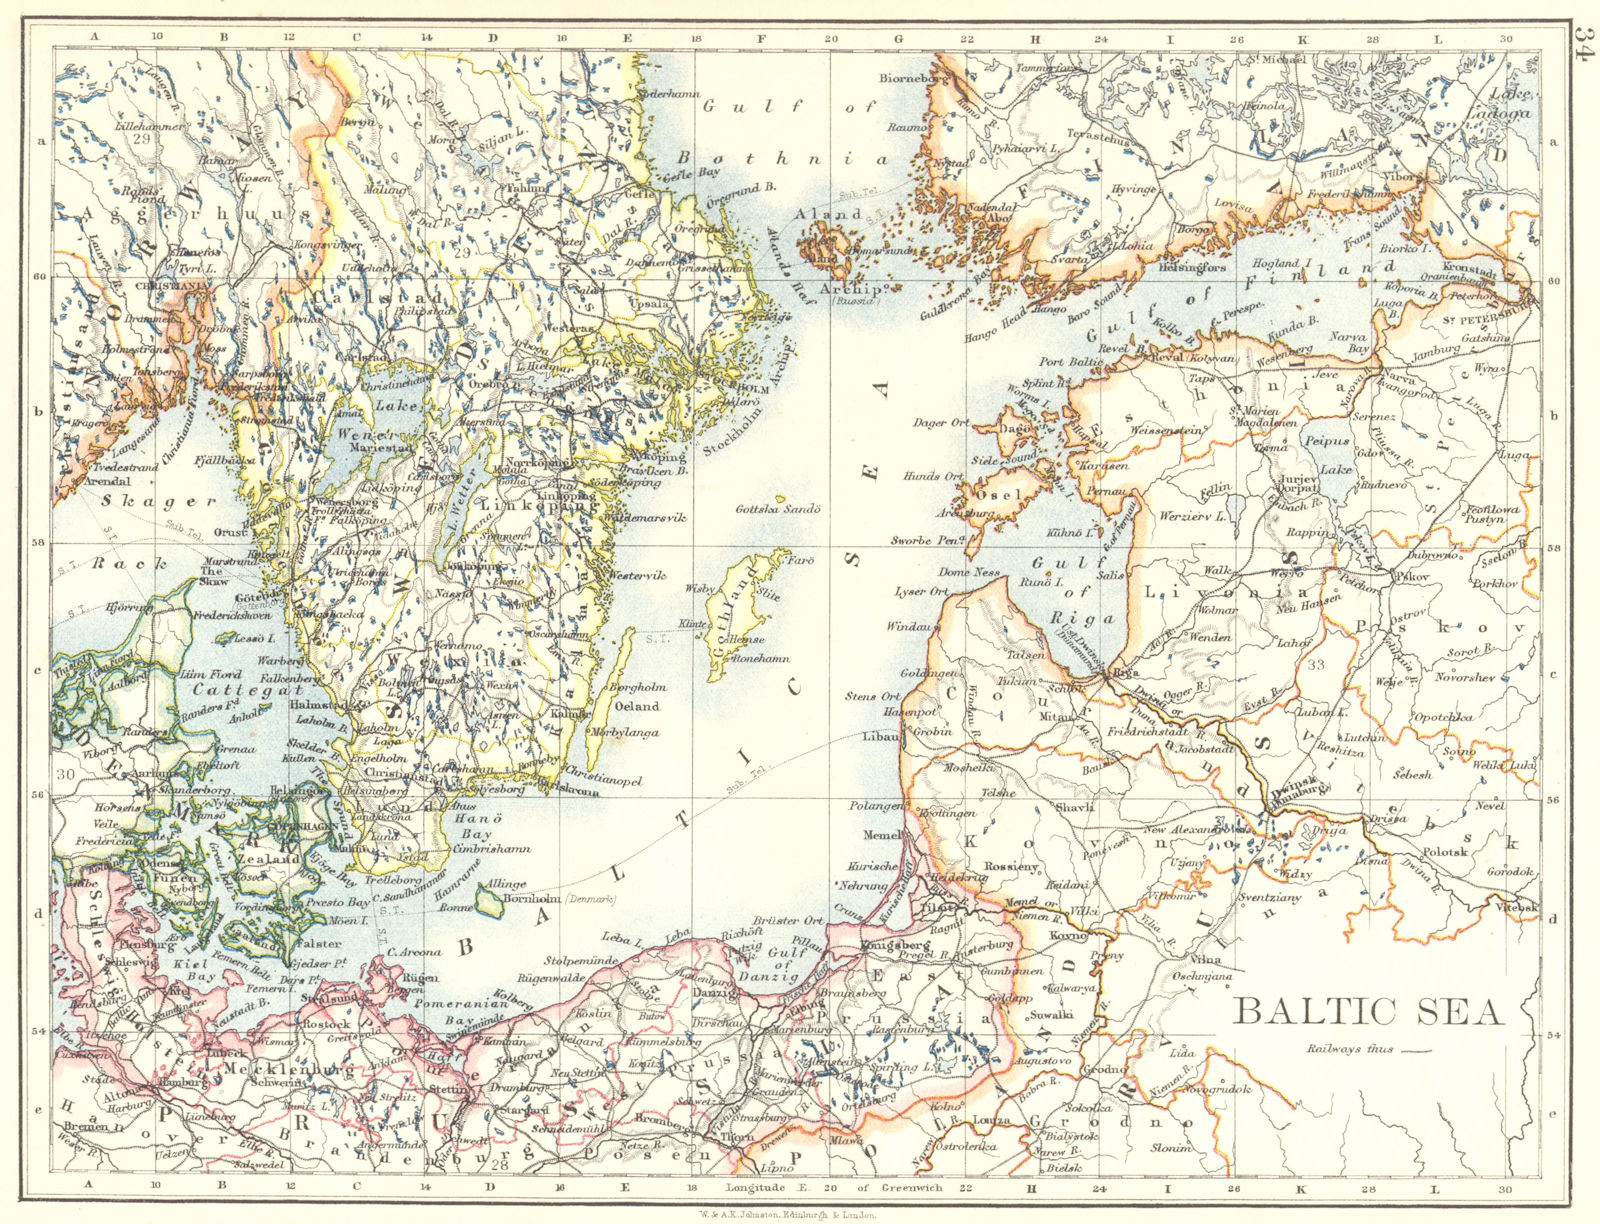 BALTIC SEA. Sweden Prussia Denmark Livonia Courland Finland. JOHNSTON 1899 map